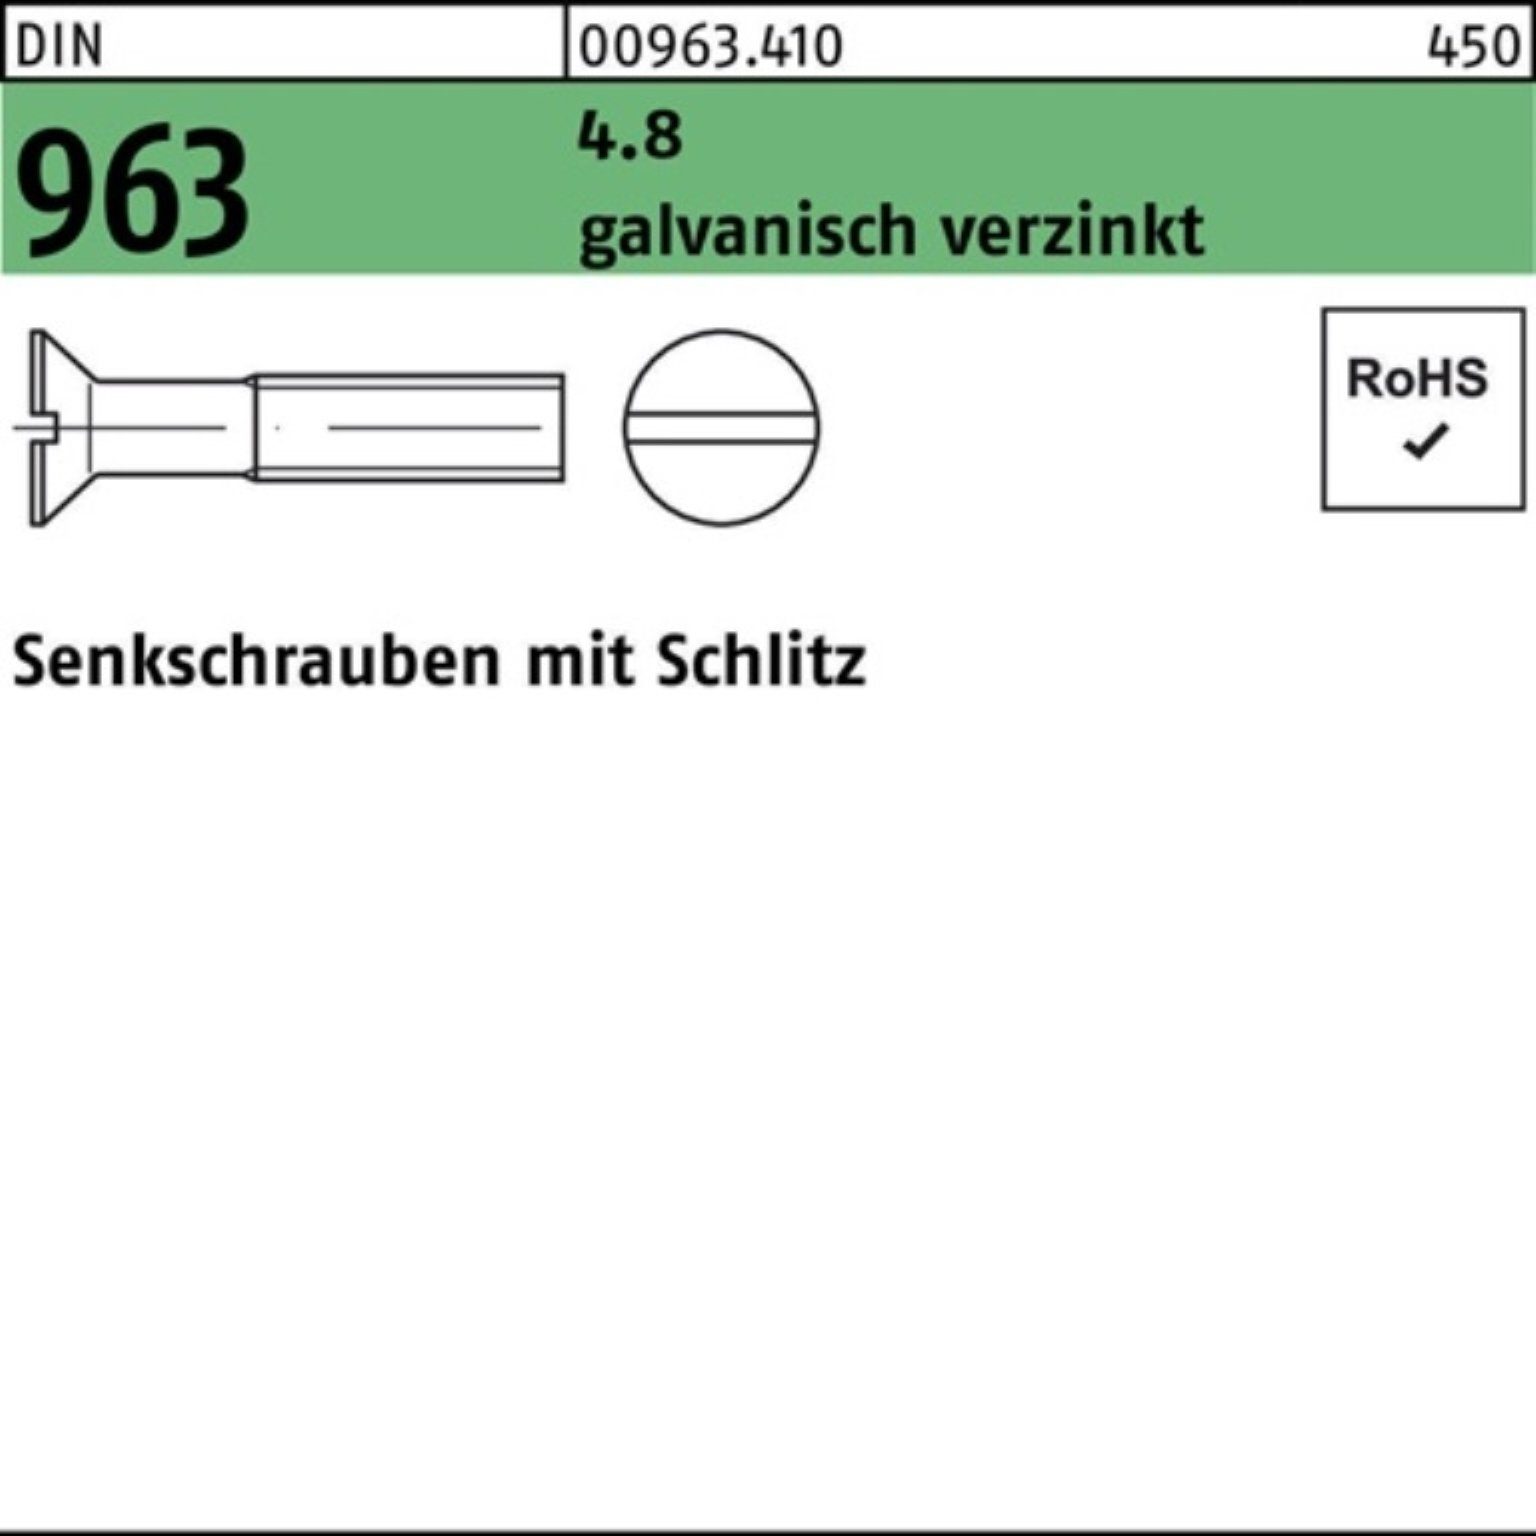 Reyher Senkschraube 100er Schlitz Pack 100 40 DIN 4.8 galv.verz. 963 Stü Senkschraube M8x